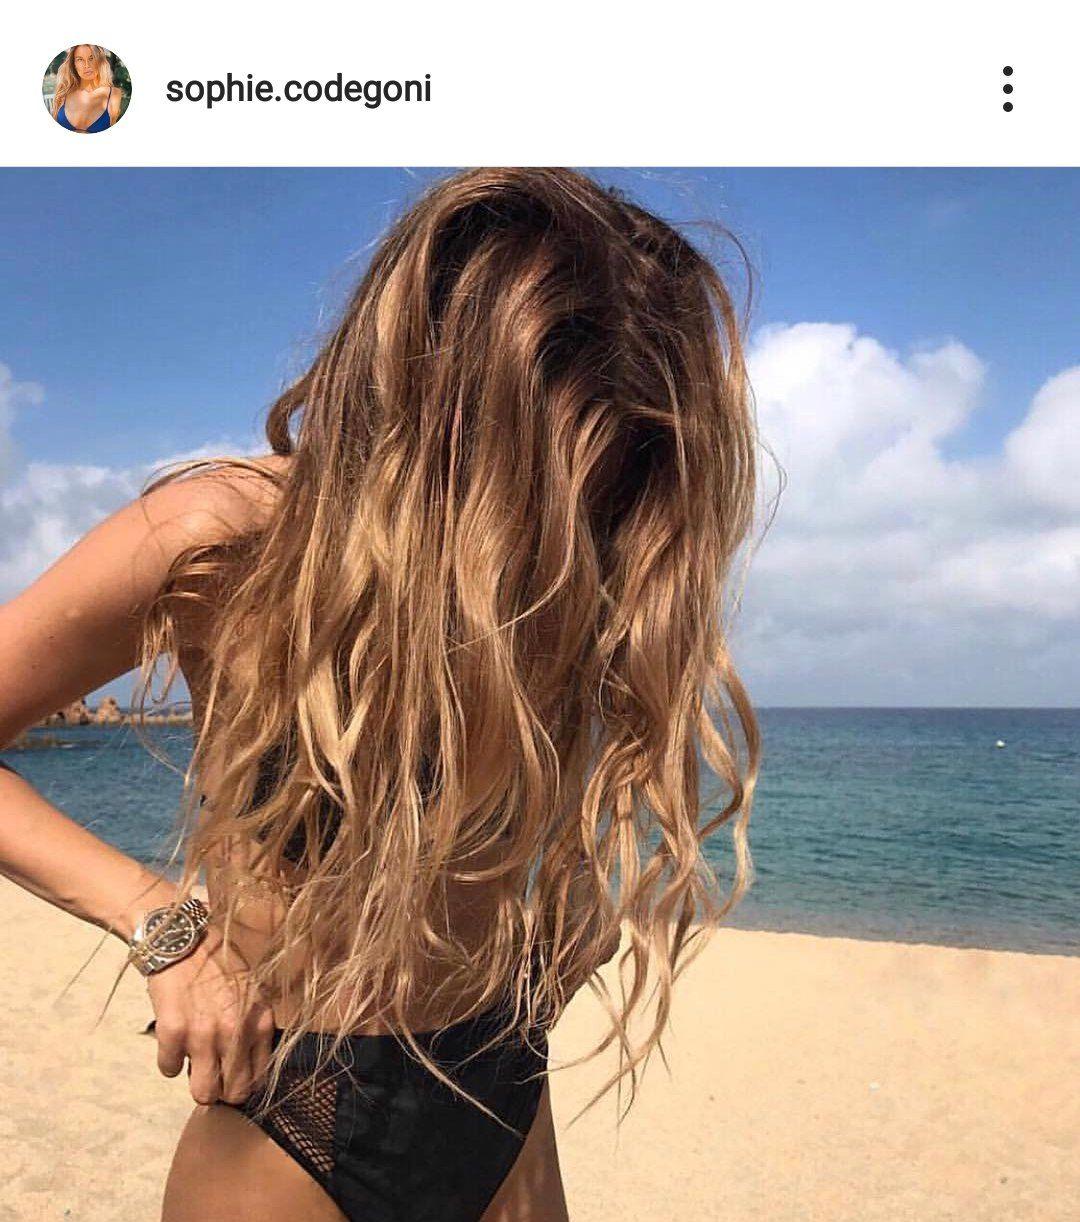 la tronista sophie codegoni su instagram